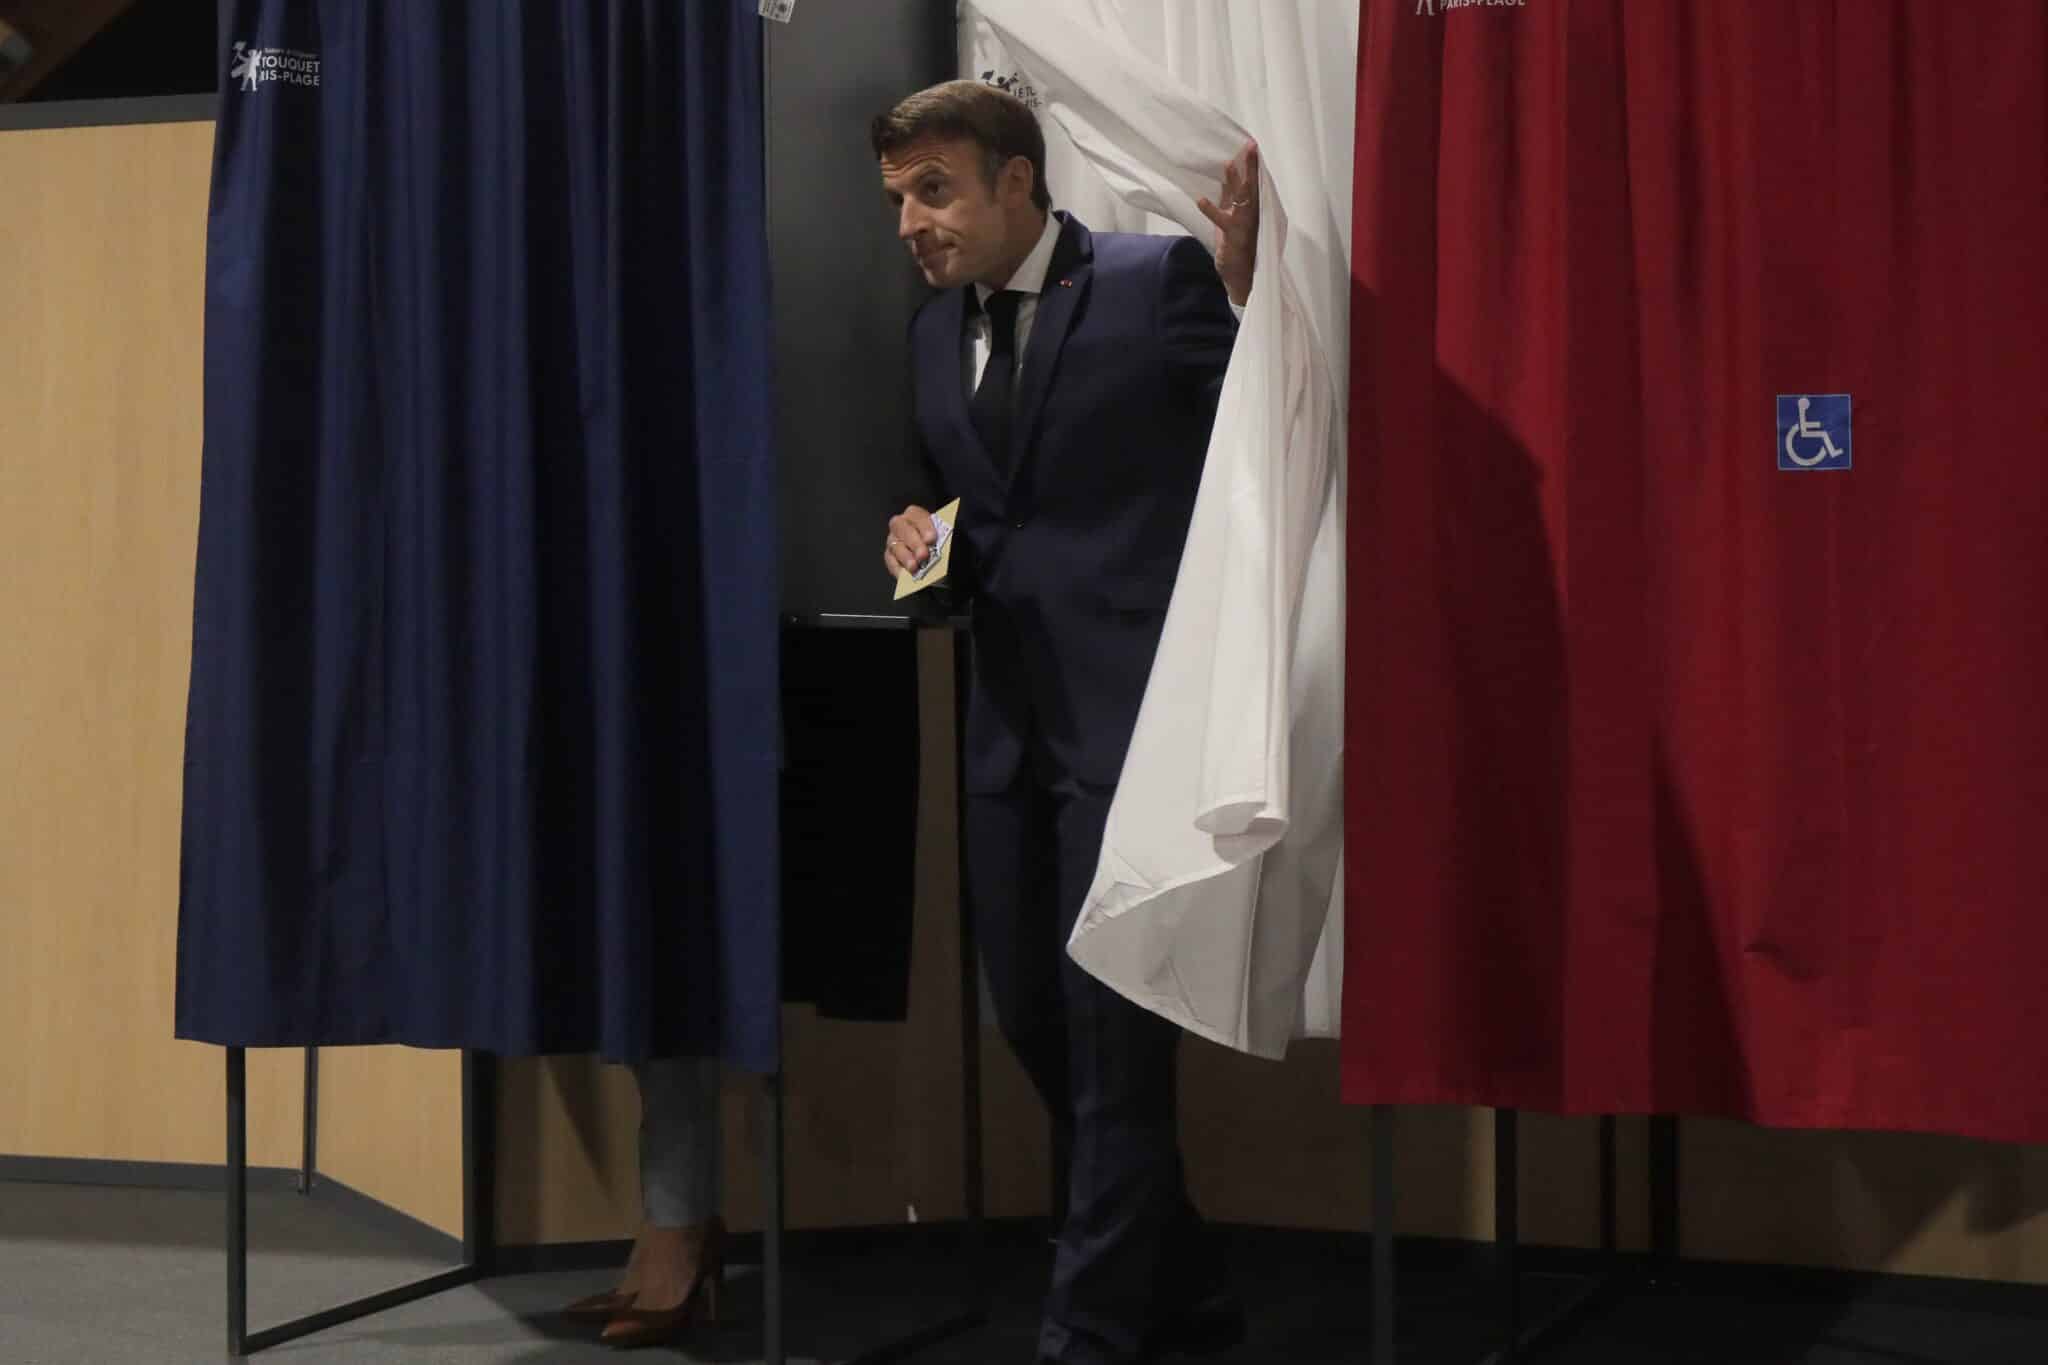 El presidente de Francia, Emmanuel Macron, vota en las legislativas